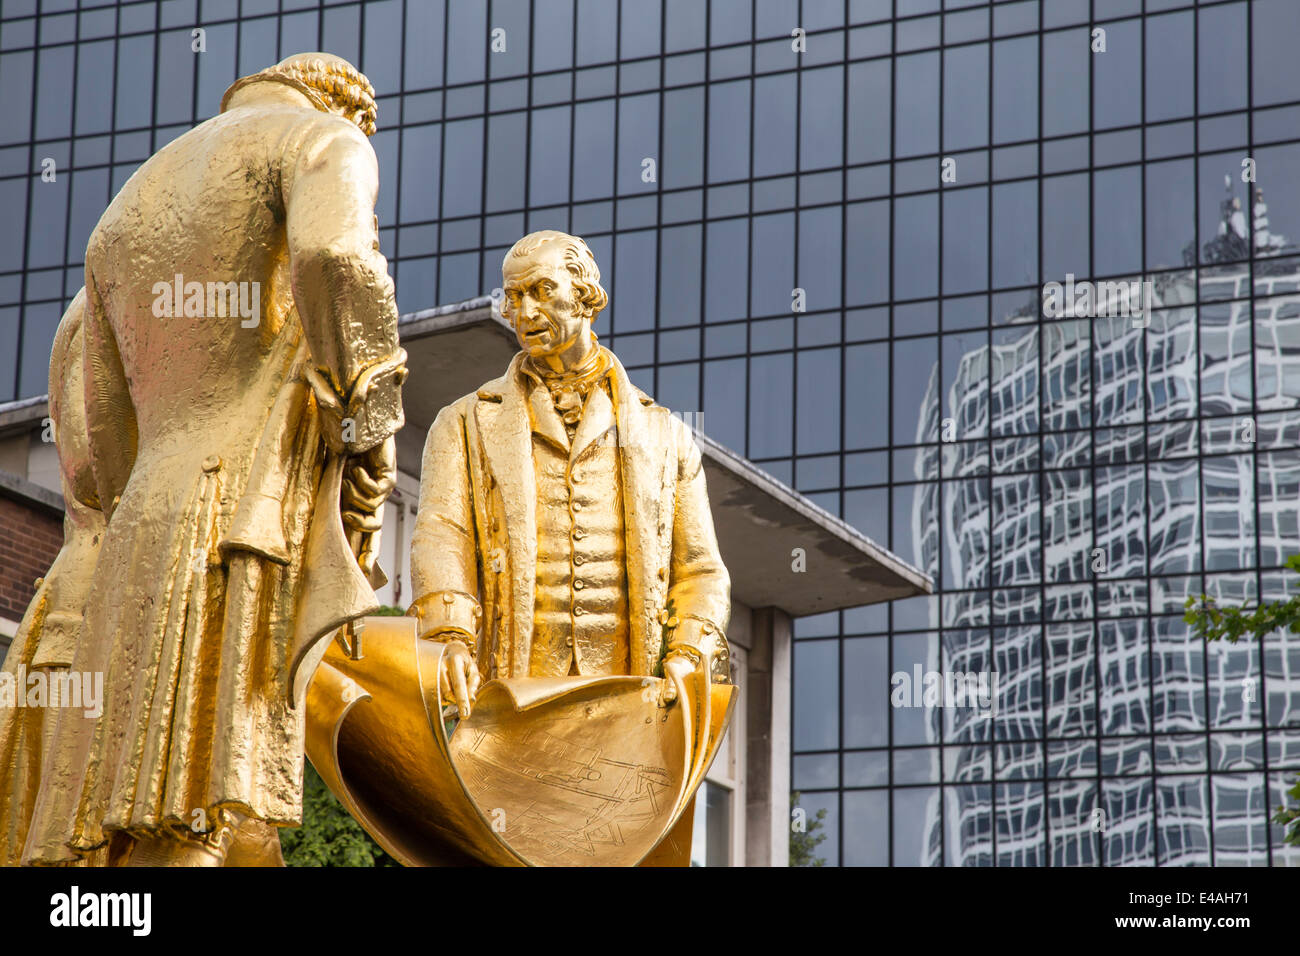 Des statues de Matthew Boulton et James Watt, William Murdoch, Broad St, Birmingham, Angleterre, RU Banque D'Images